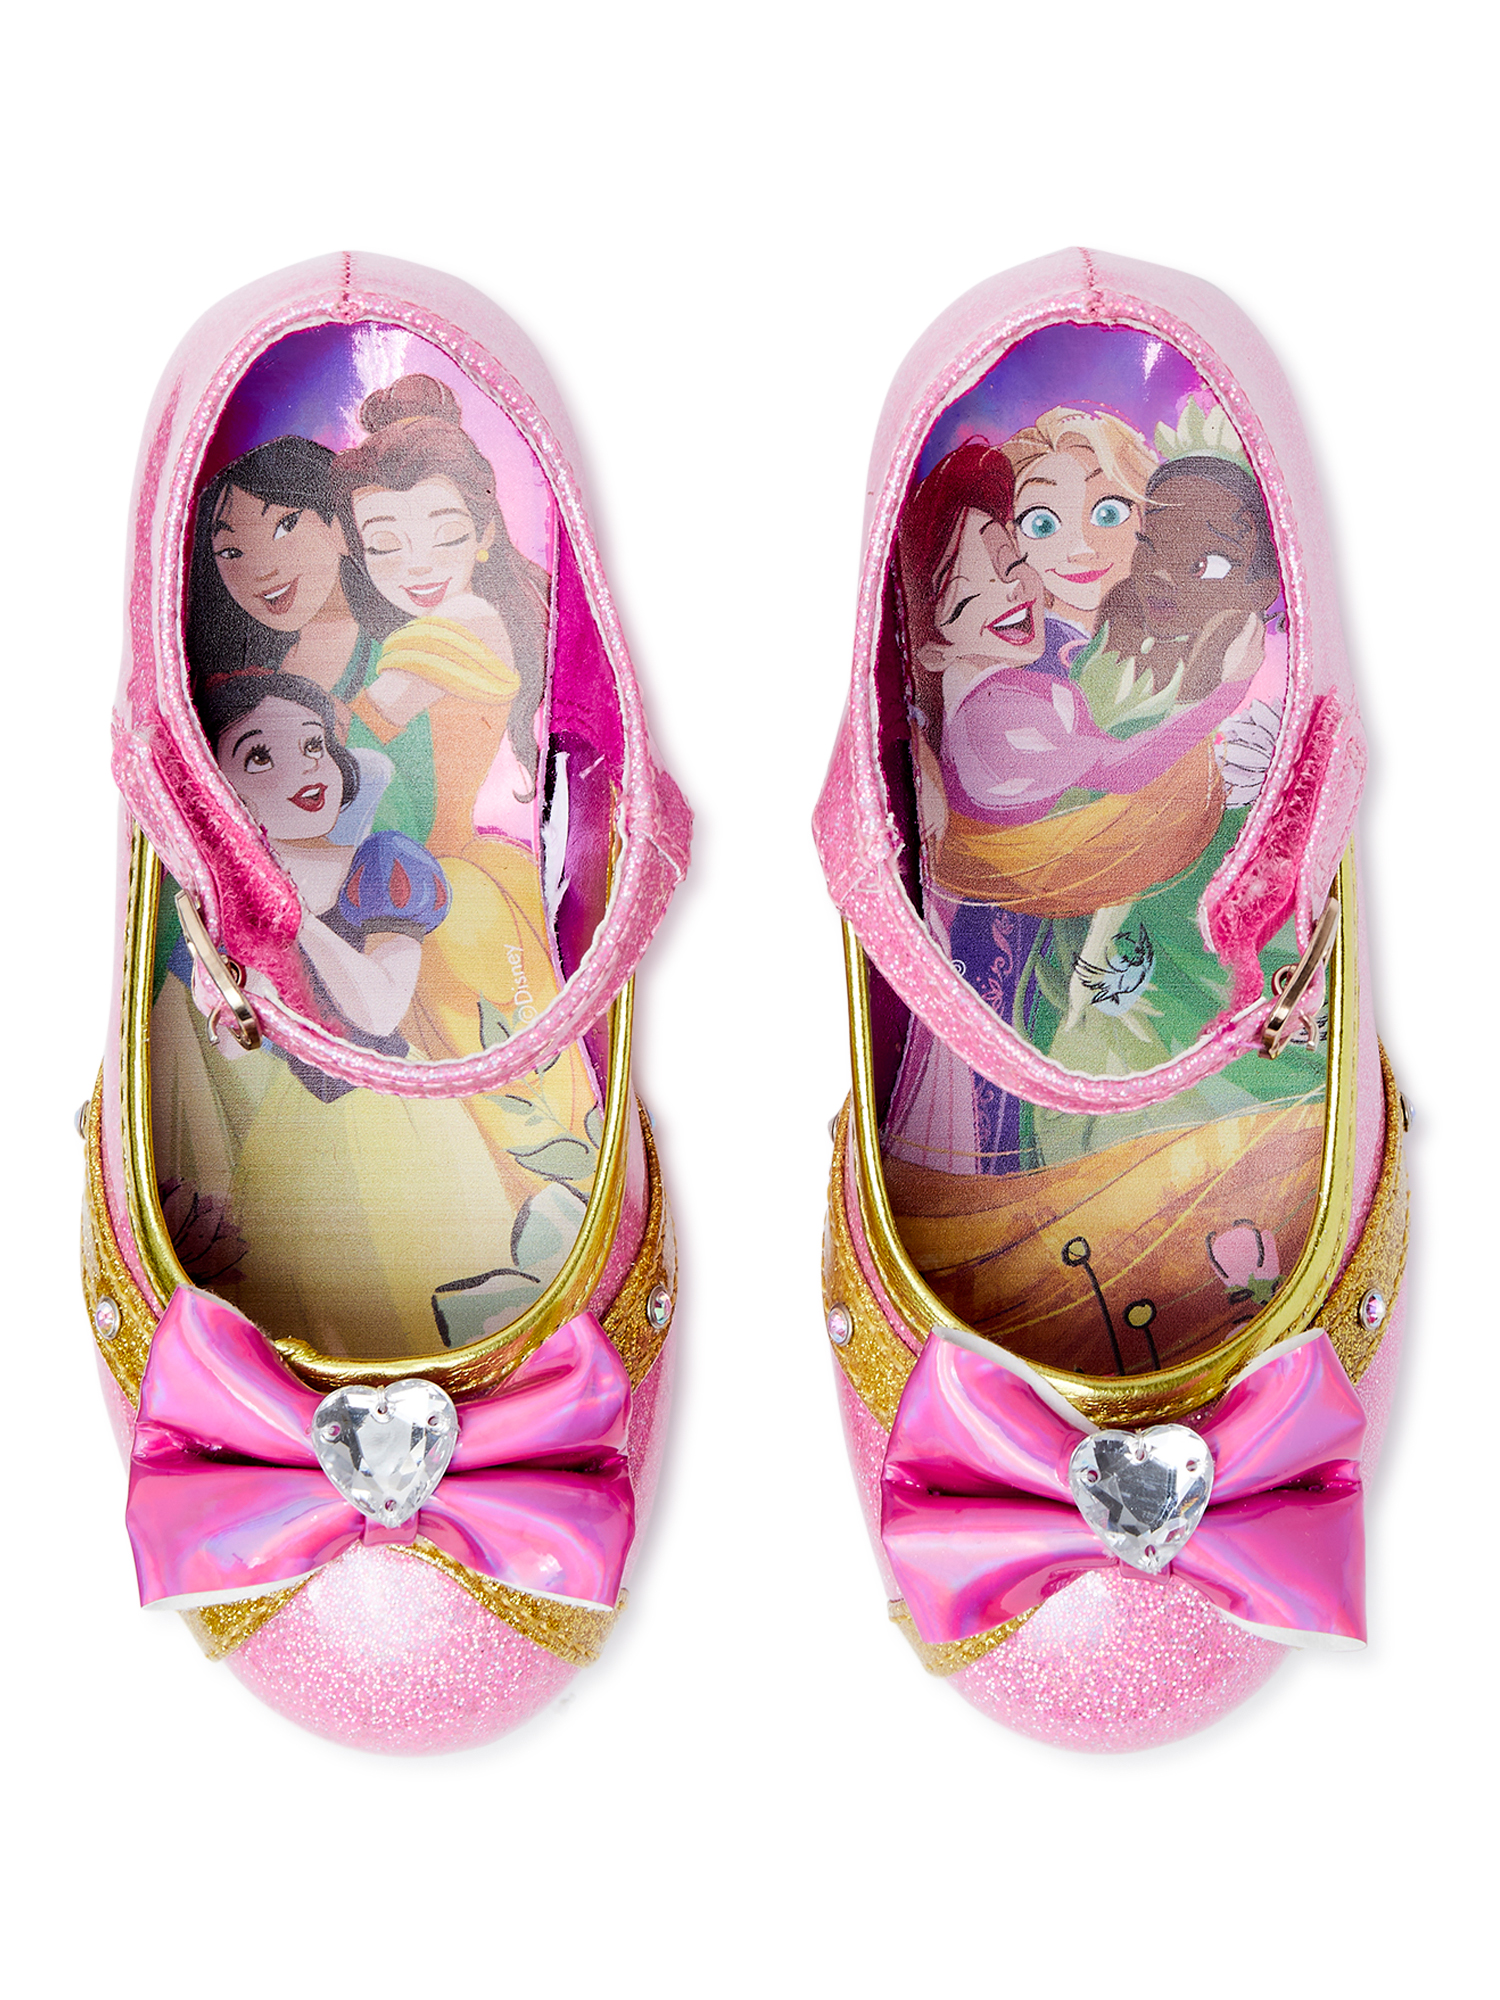 Disney Princess Toddler Girl Low Heel Dress Up Shoes - image 2 of 3